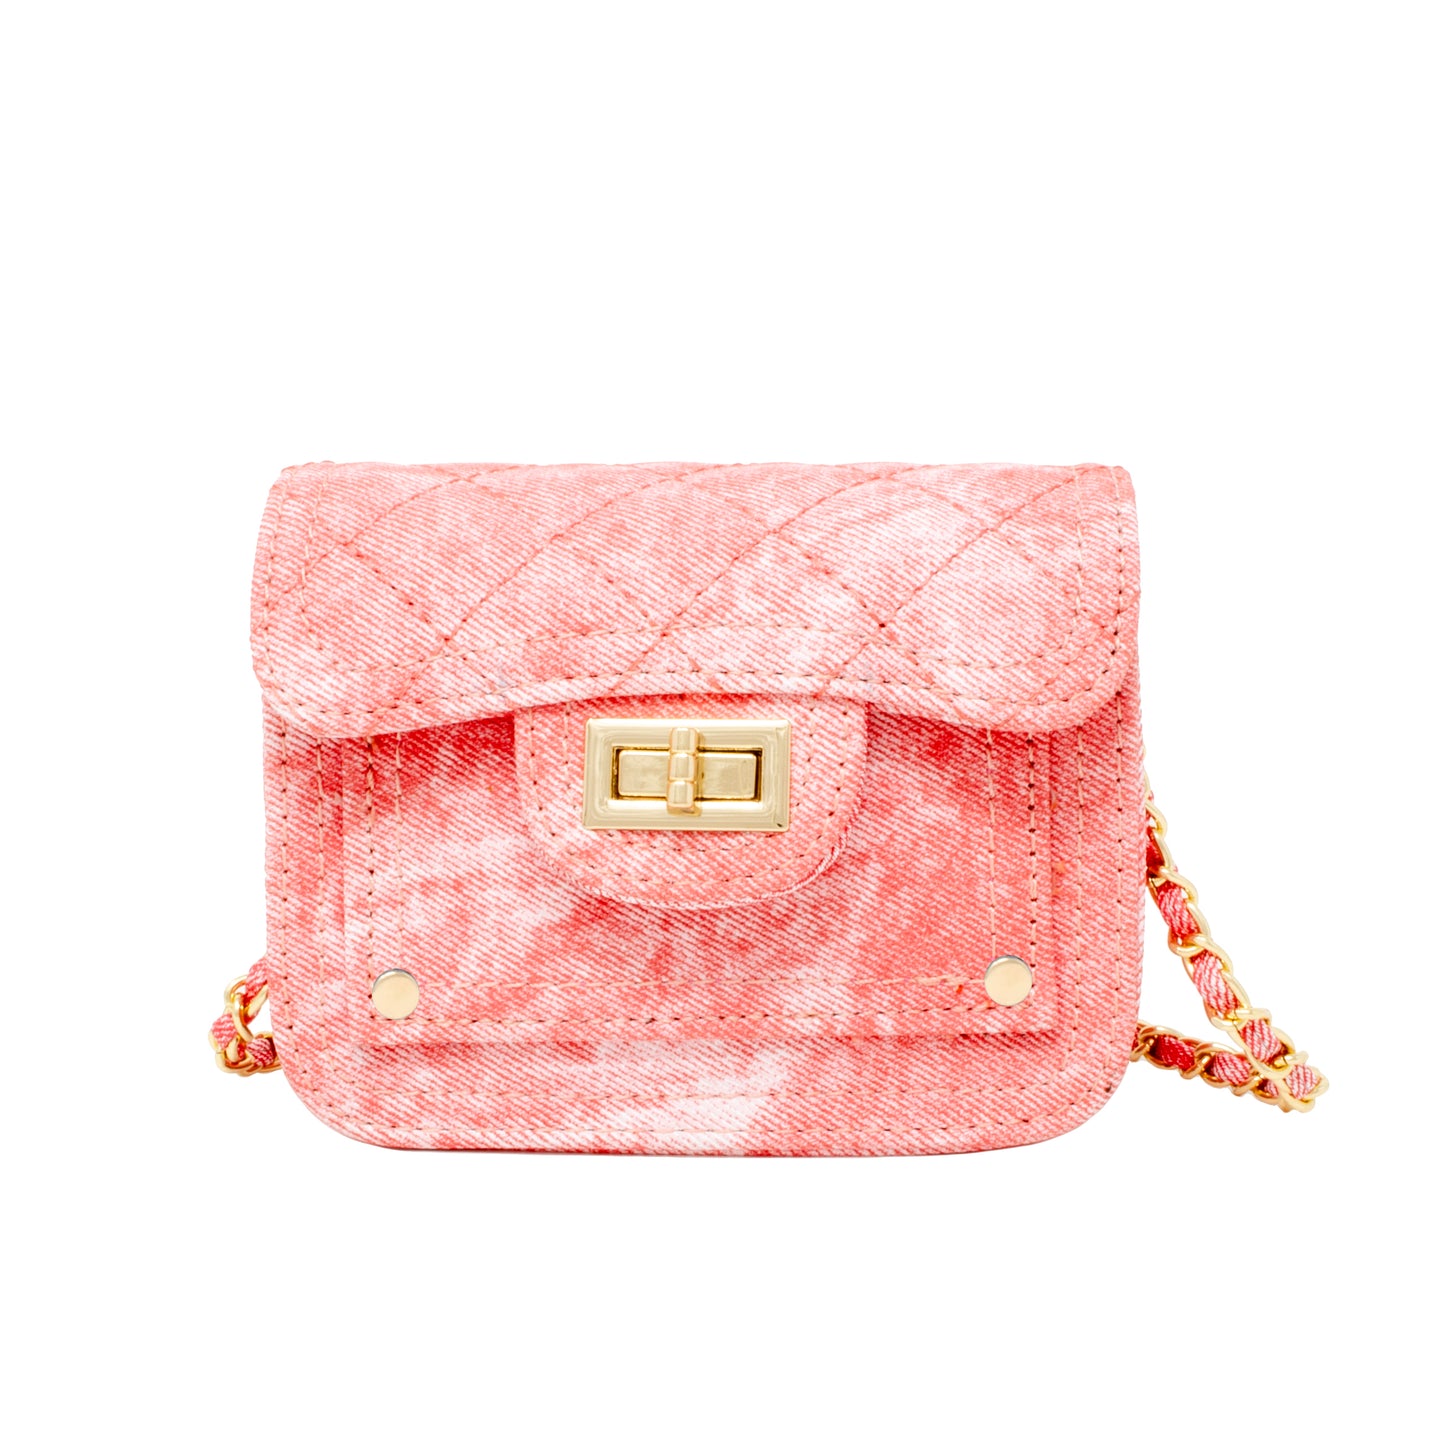 Tie Dye Quilted Denim Handbag in Pink